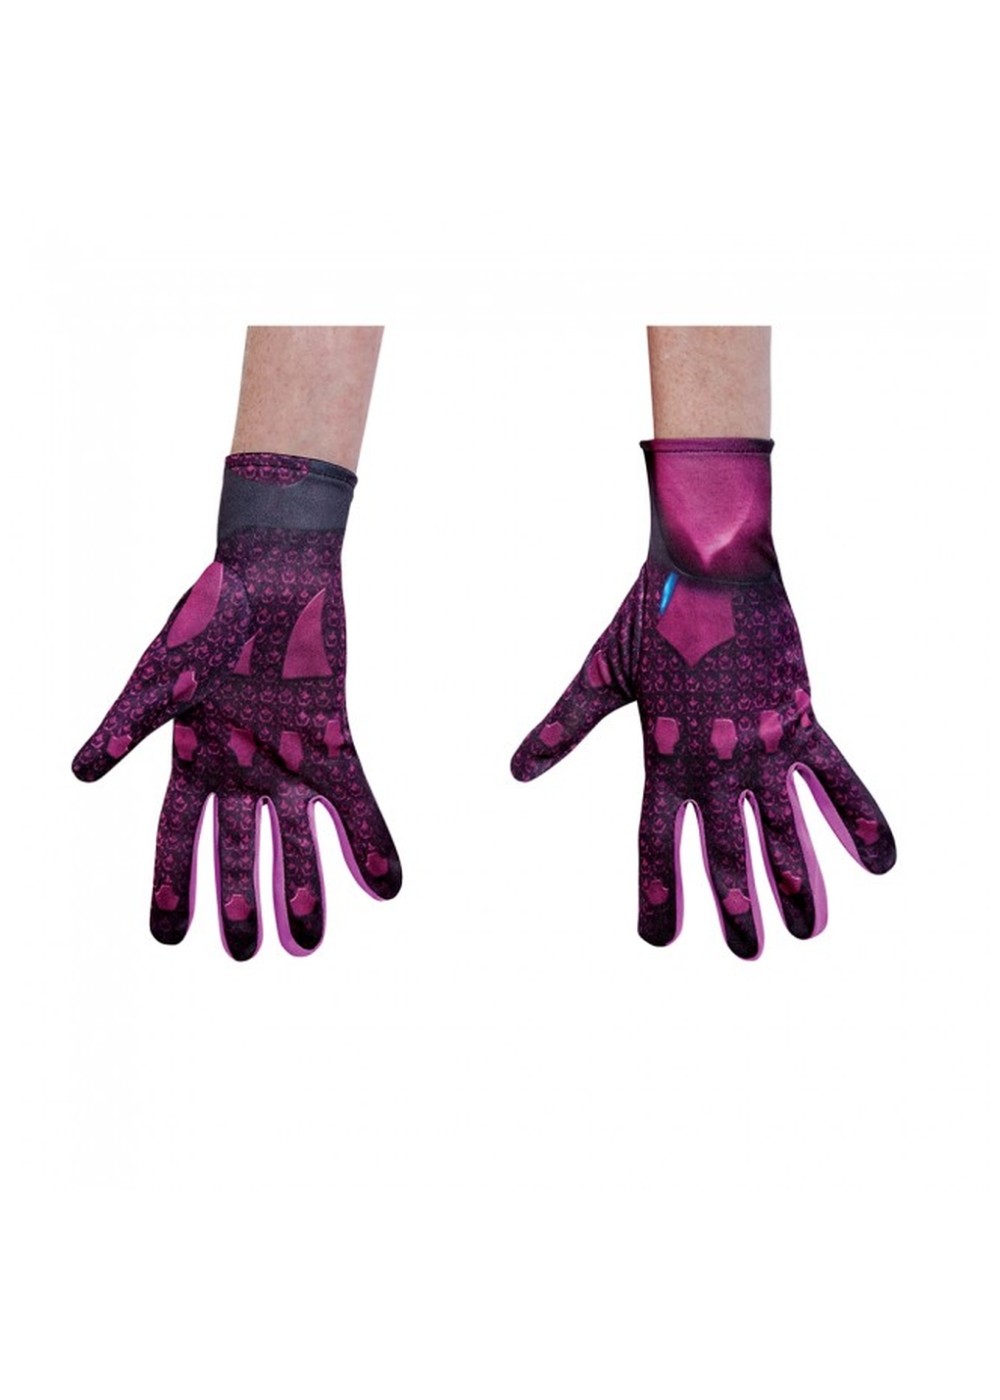 Womens Pink Ranger Gloves Accessory